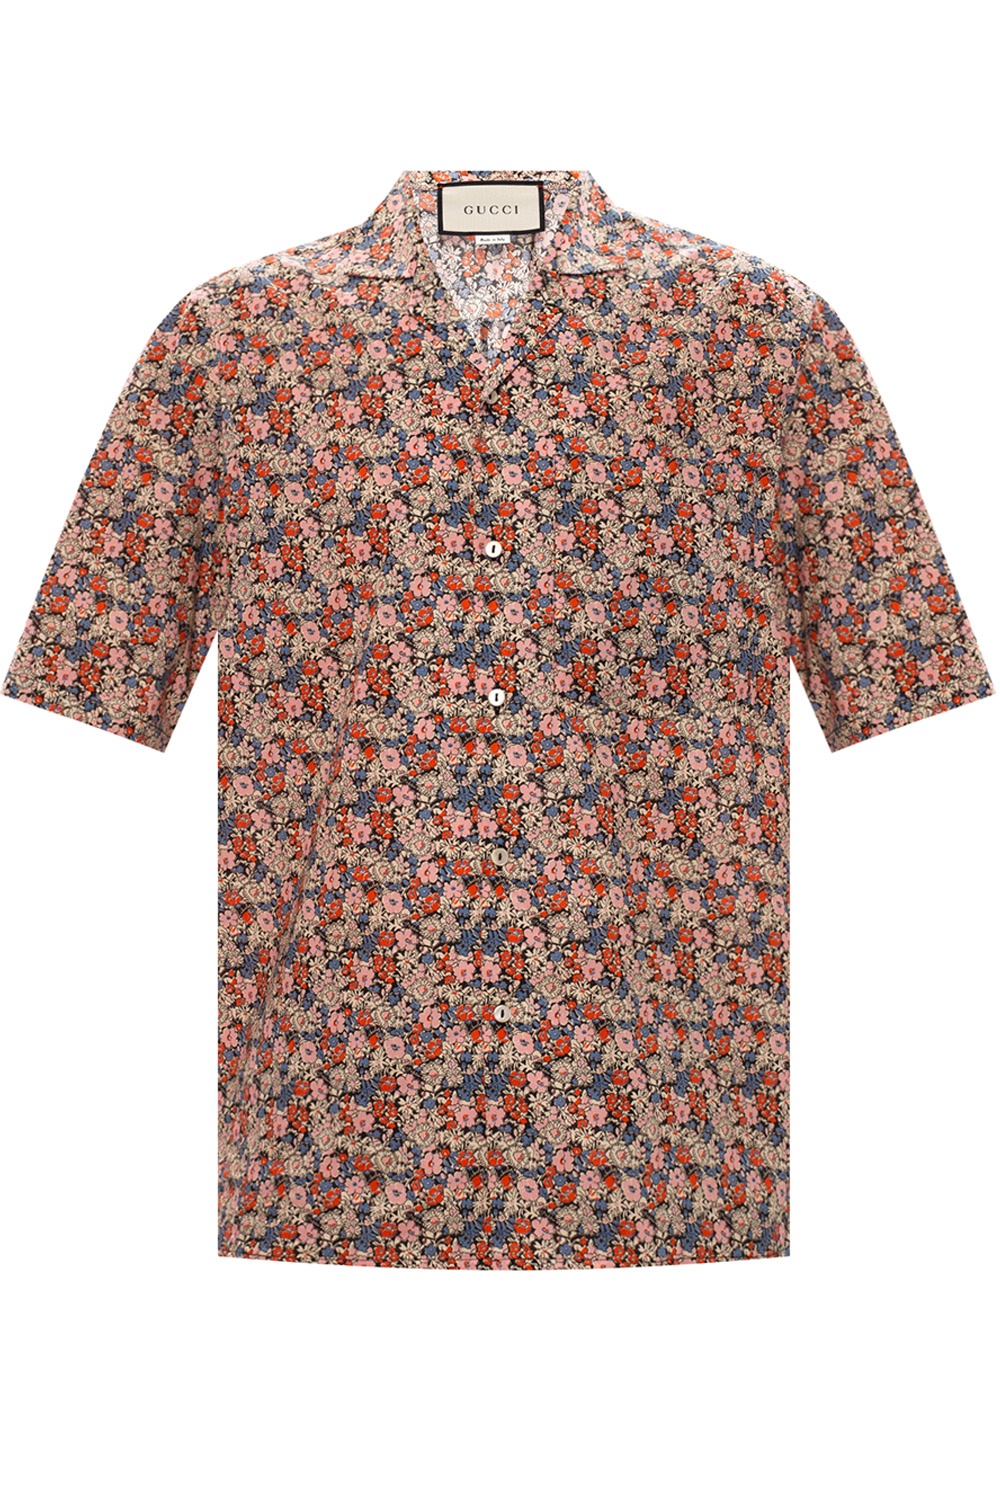 Gucci Floral-printed shirt